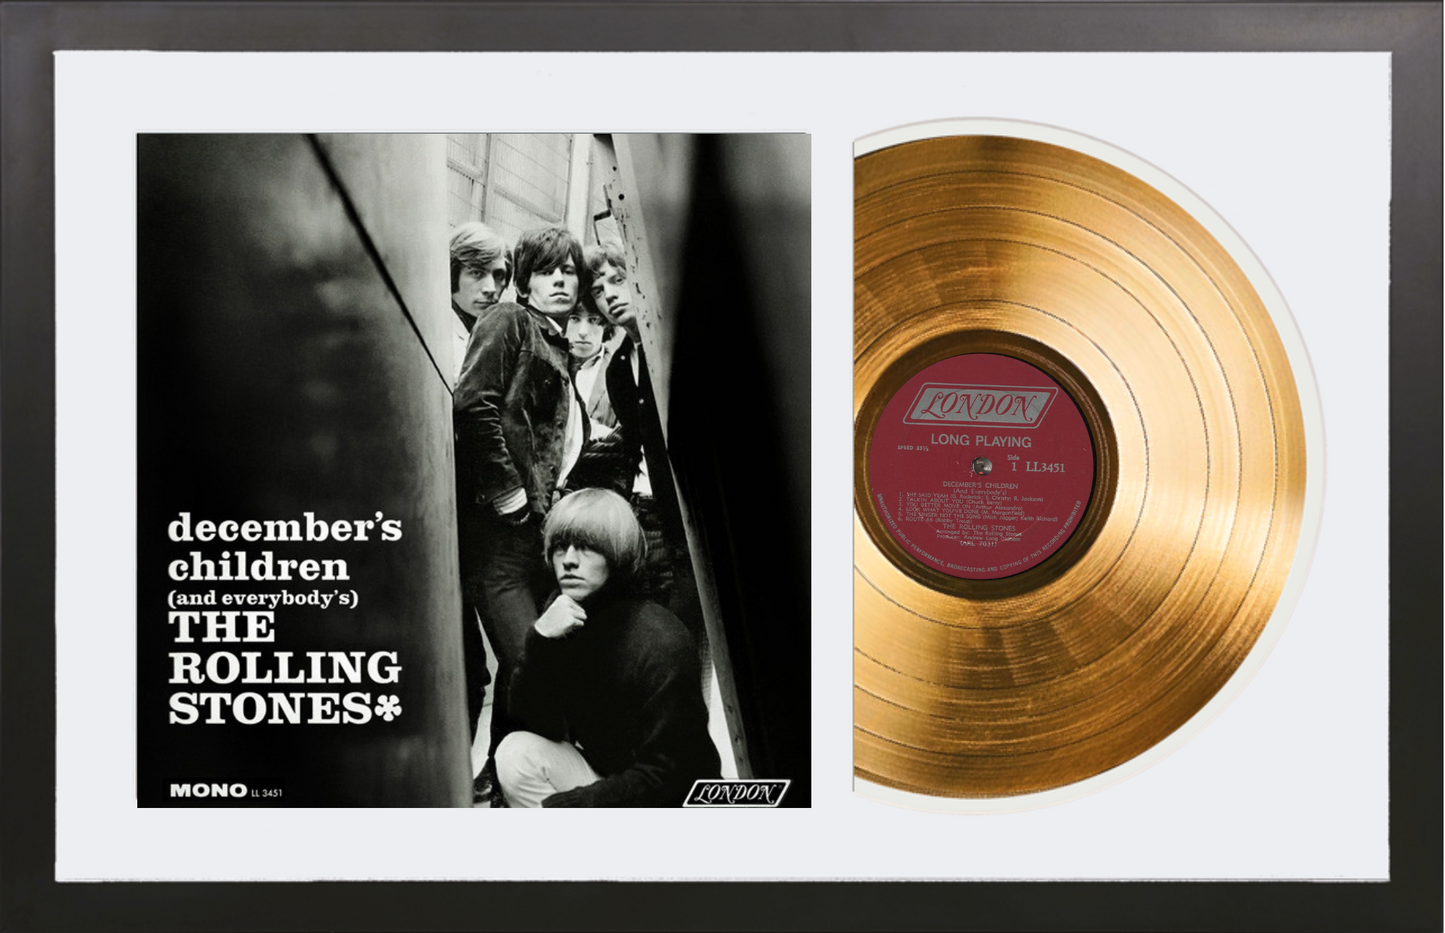 The Rolling Stones - December's Children (And Everybody's) - 14K Gold Framed Album